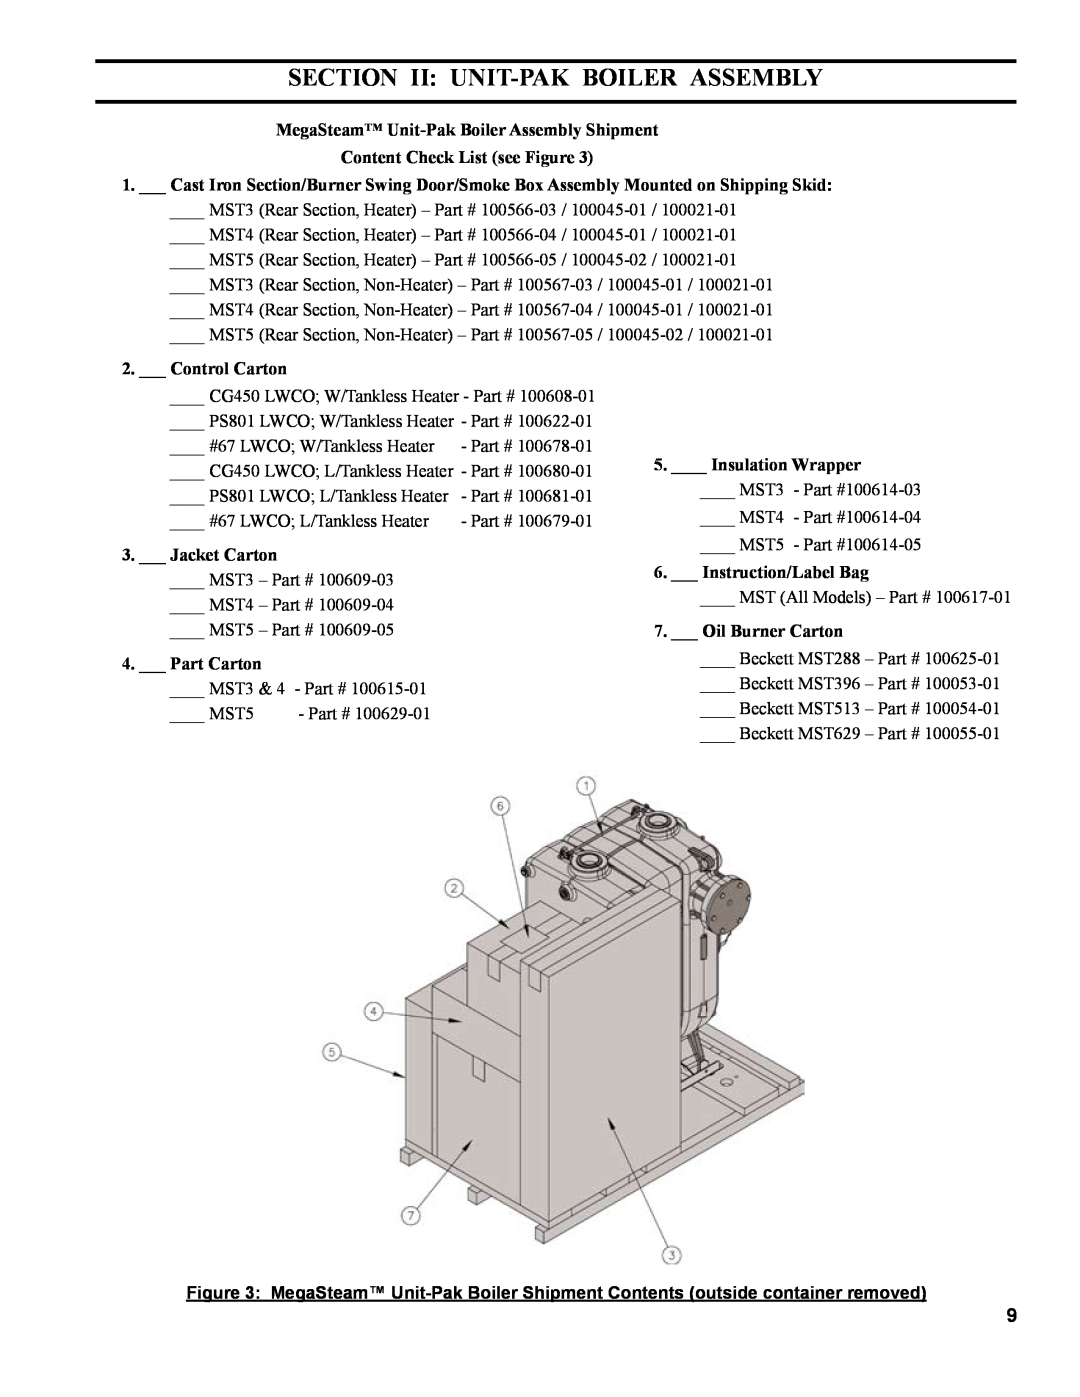 Burnham MST396, MST288 Section Ii Unit-Pak Boiler Assembly, MegaSteam Unit-Pak Boiler Assembly Shipment, Control Carton 